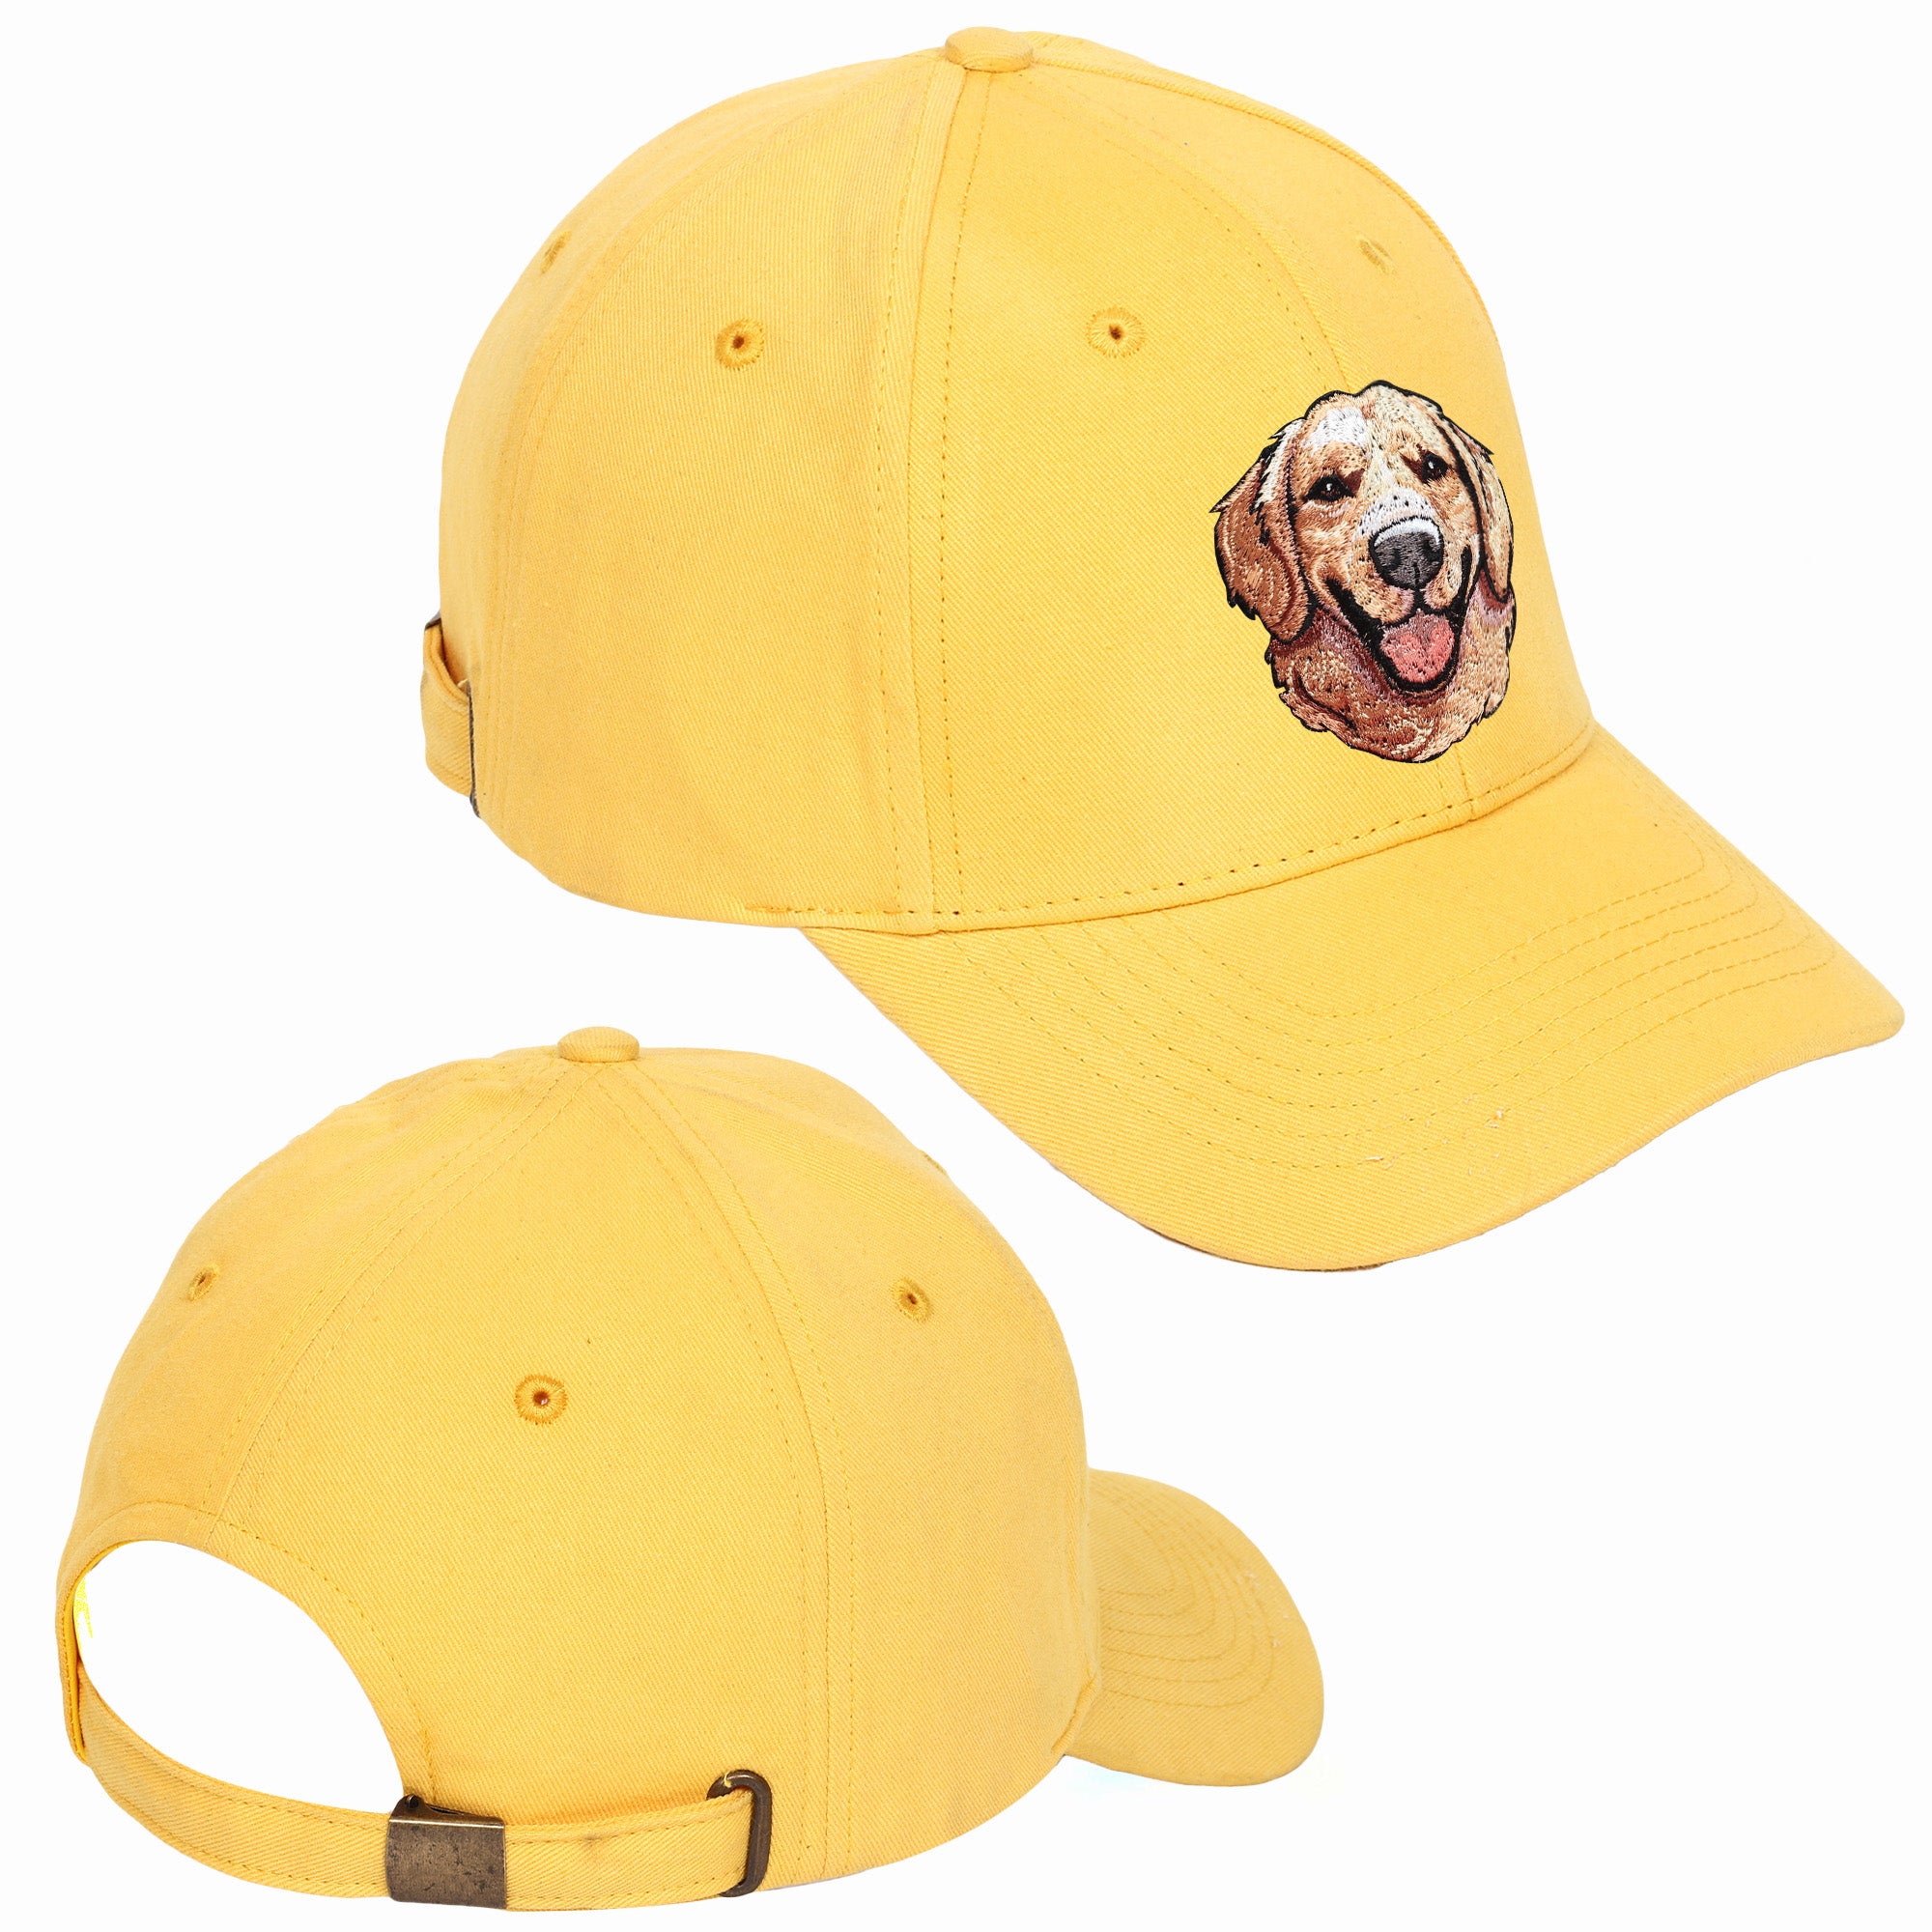 Golden Boy Embroidered Baseball Caps